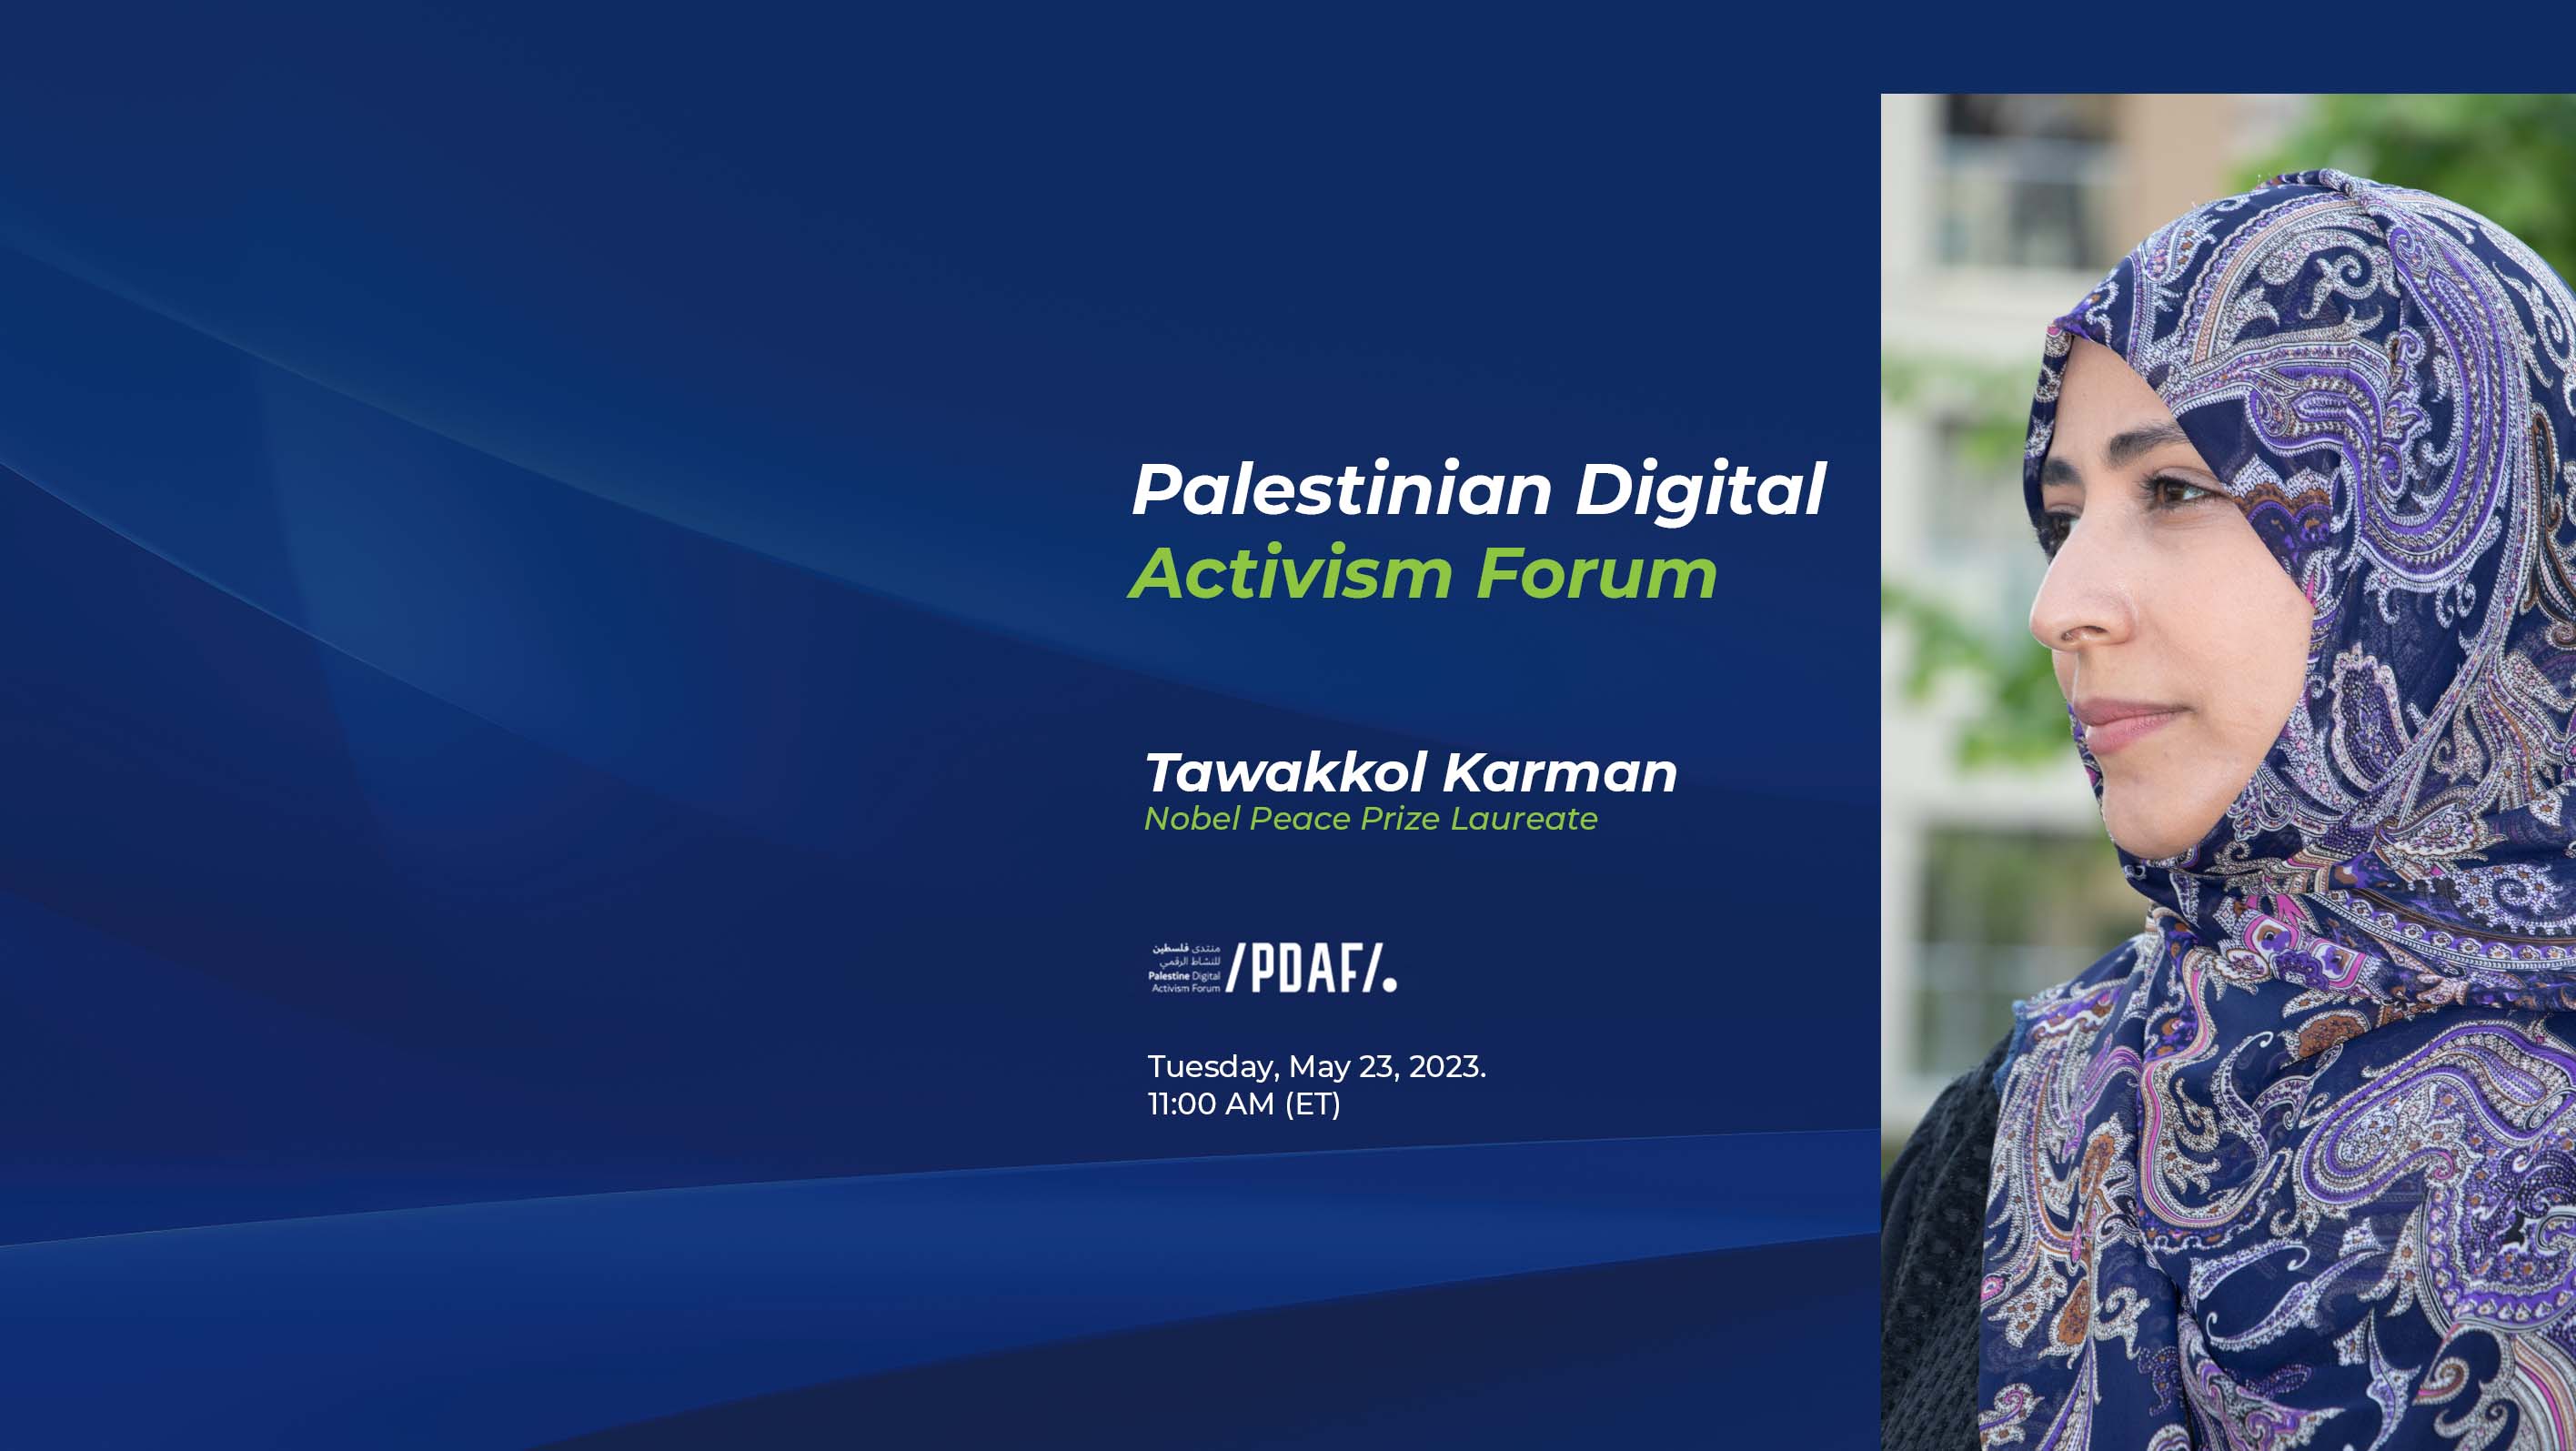 Tawakkol Karman joins Palestine Digital Activism Forum 2023 as keynote speaker